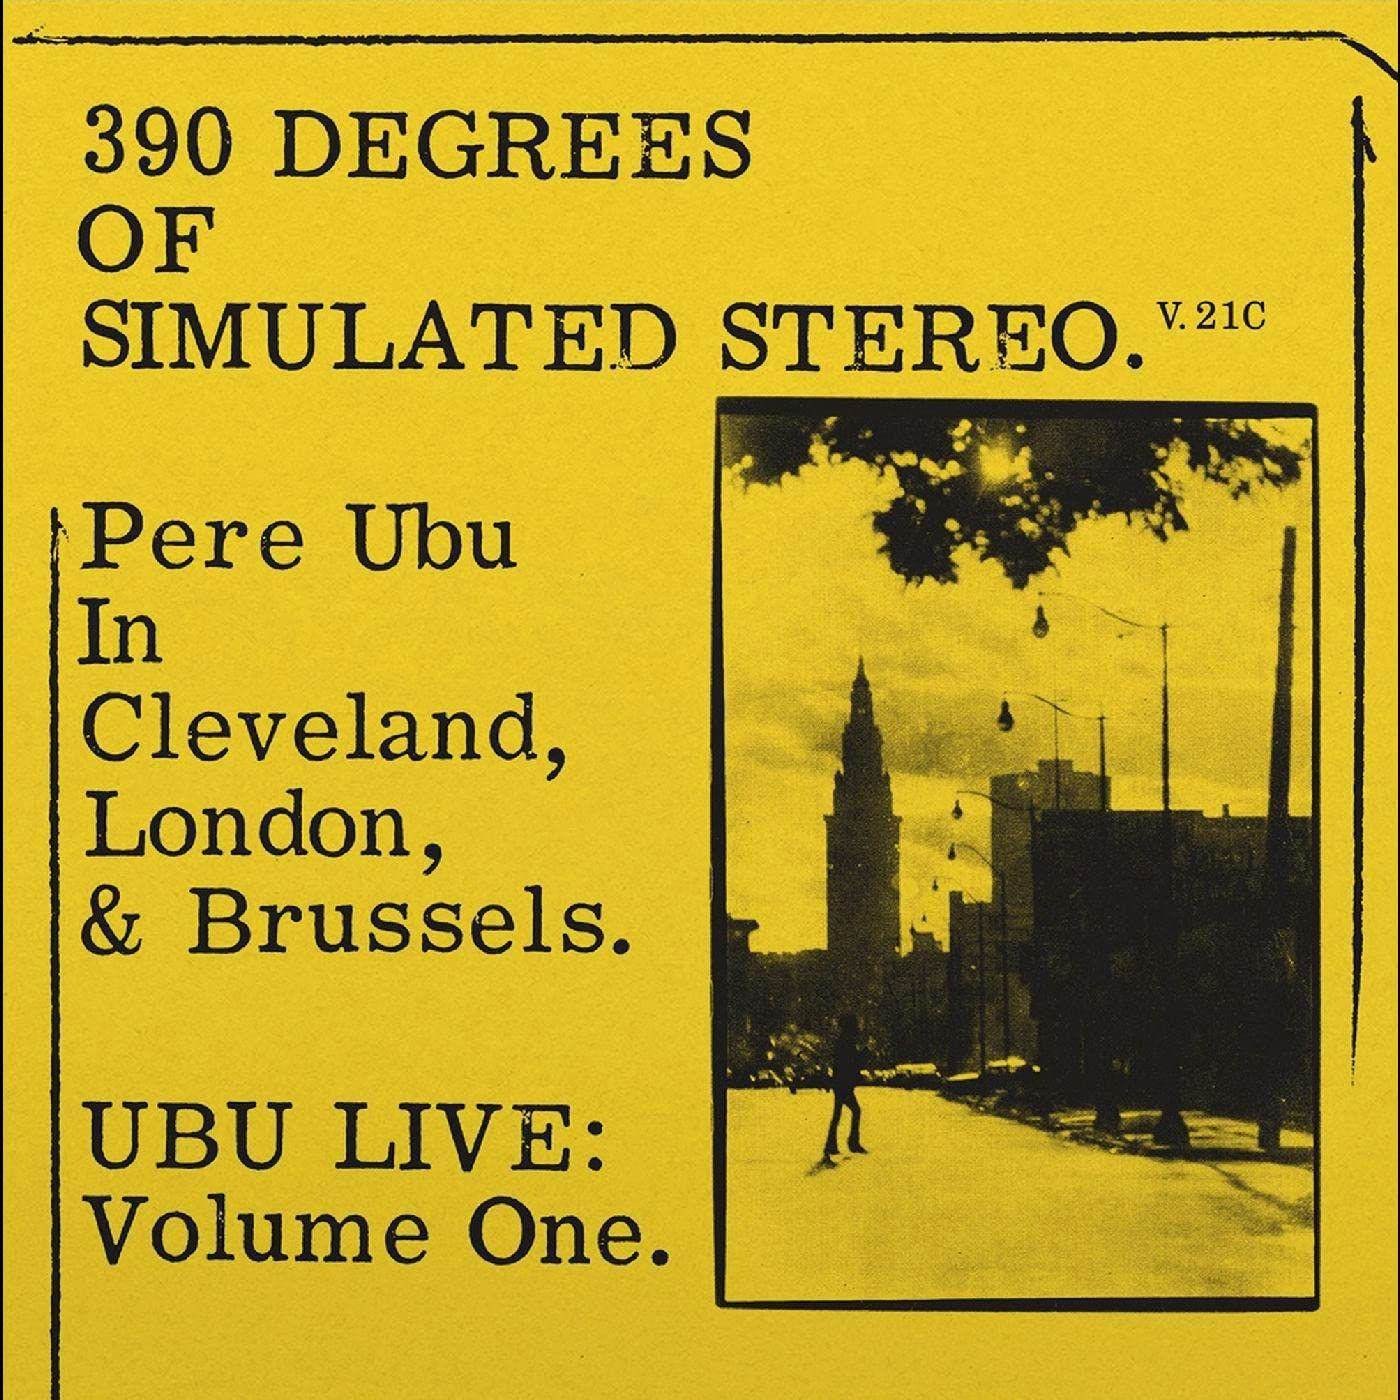 Pere Ubu 390 Degrees Of Simulated Stereo V2.1 Vinyl Record